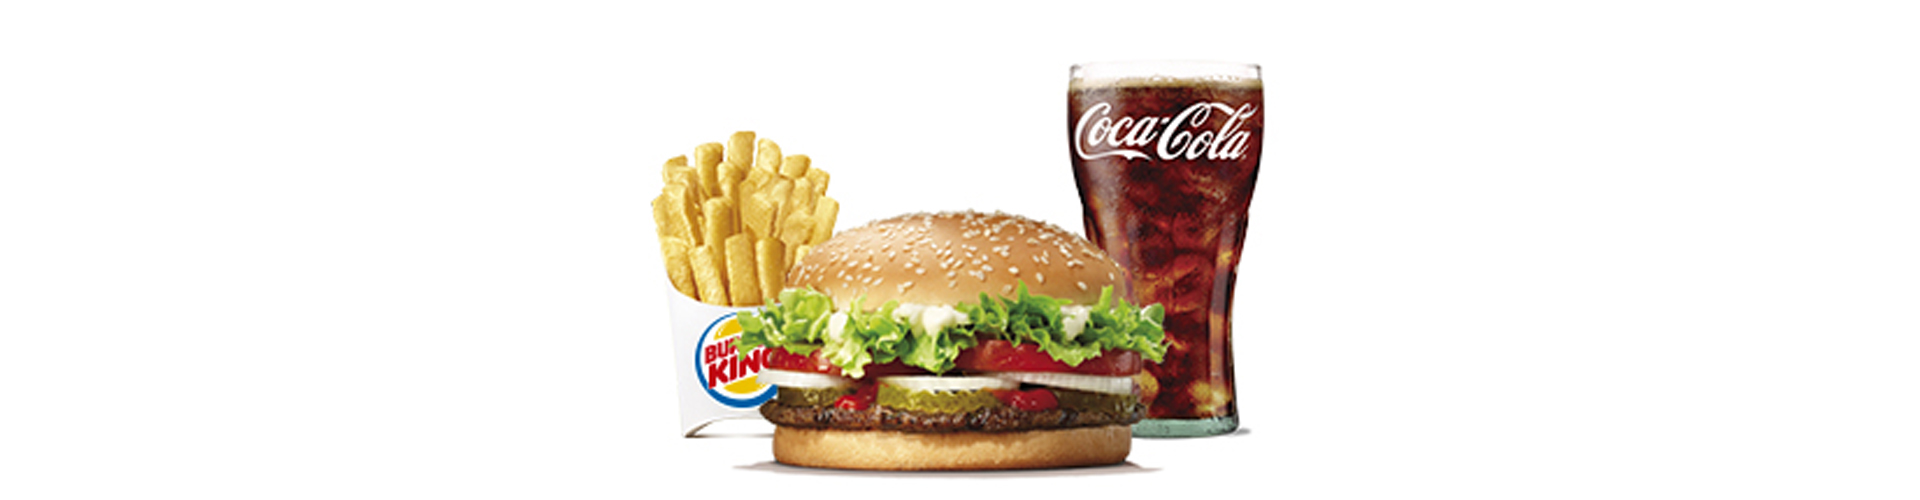 menu-whopper-burgerking-40001707-cocacola-light-aros